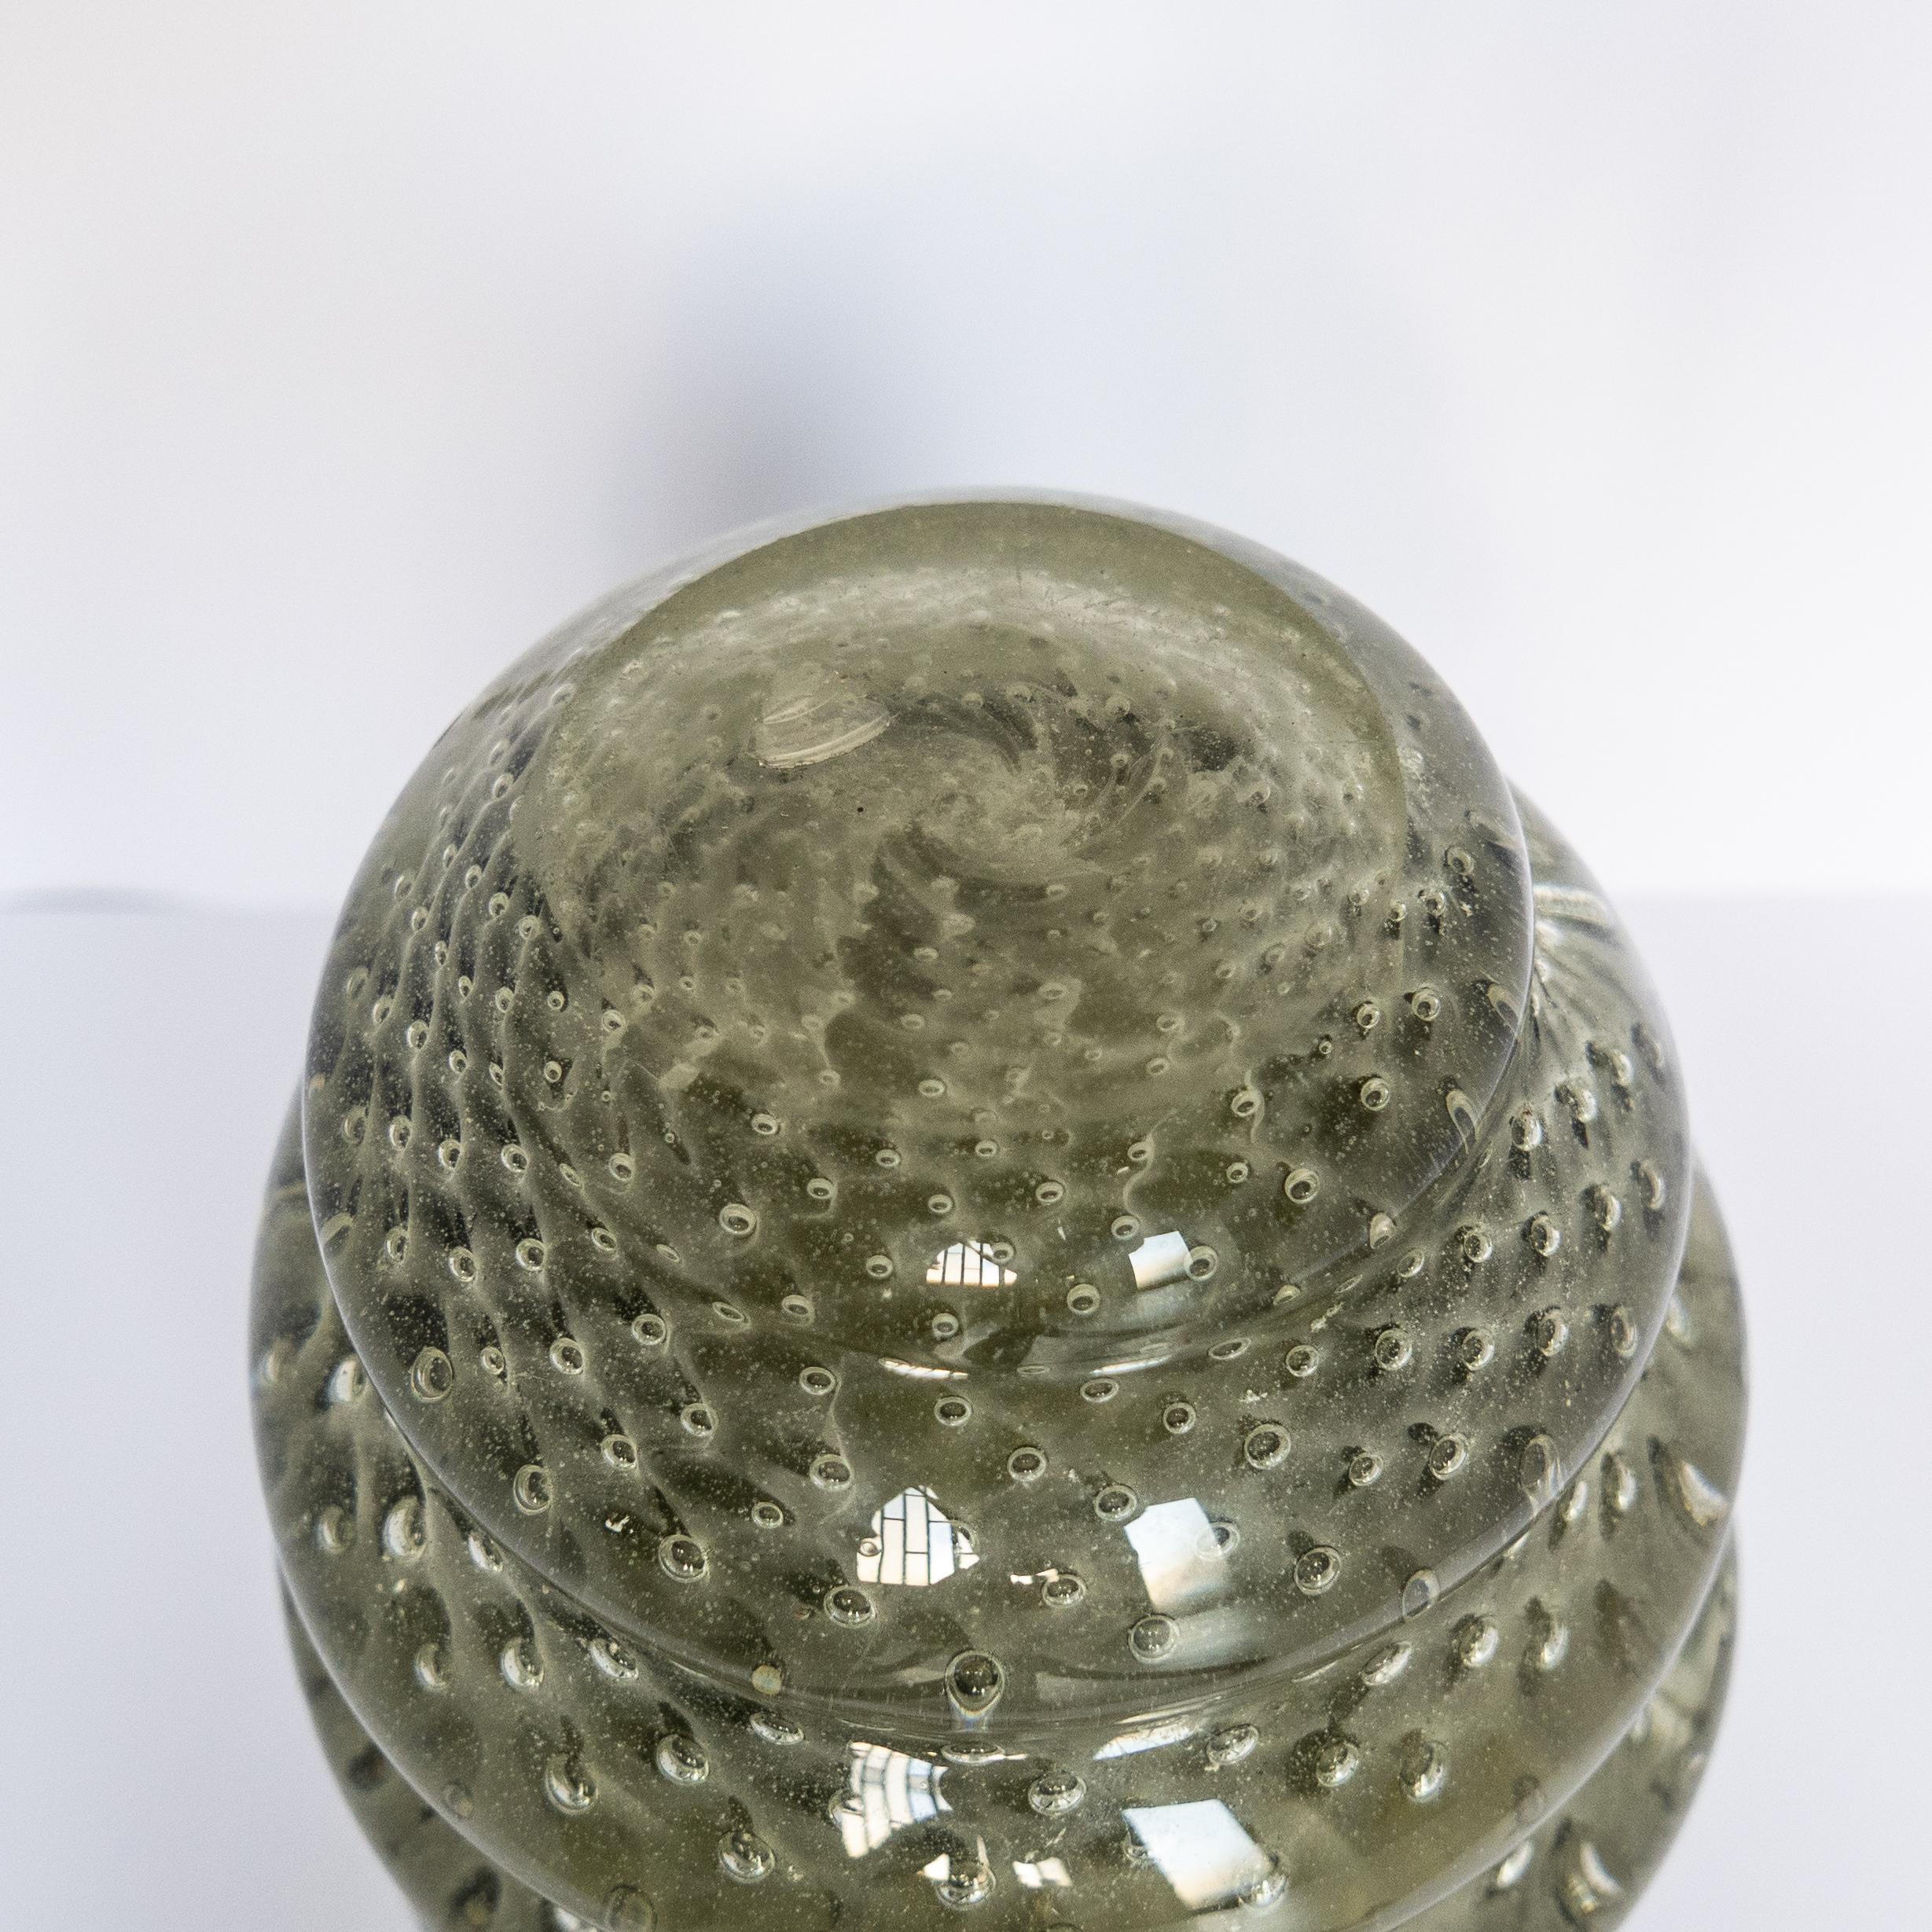 Heavy Murano vase by Barbini, green/grey, collectible decorative Italian piece For Sale 1